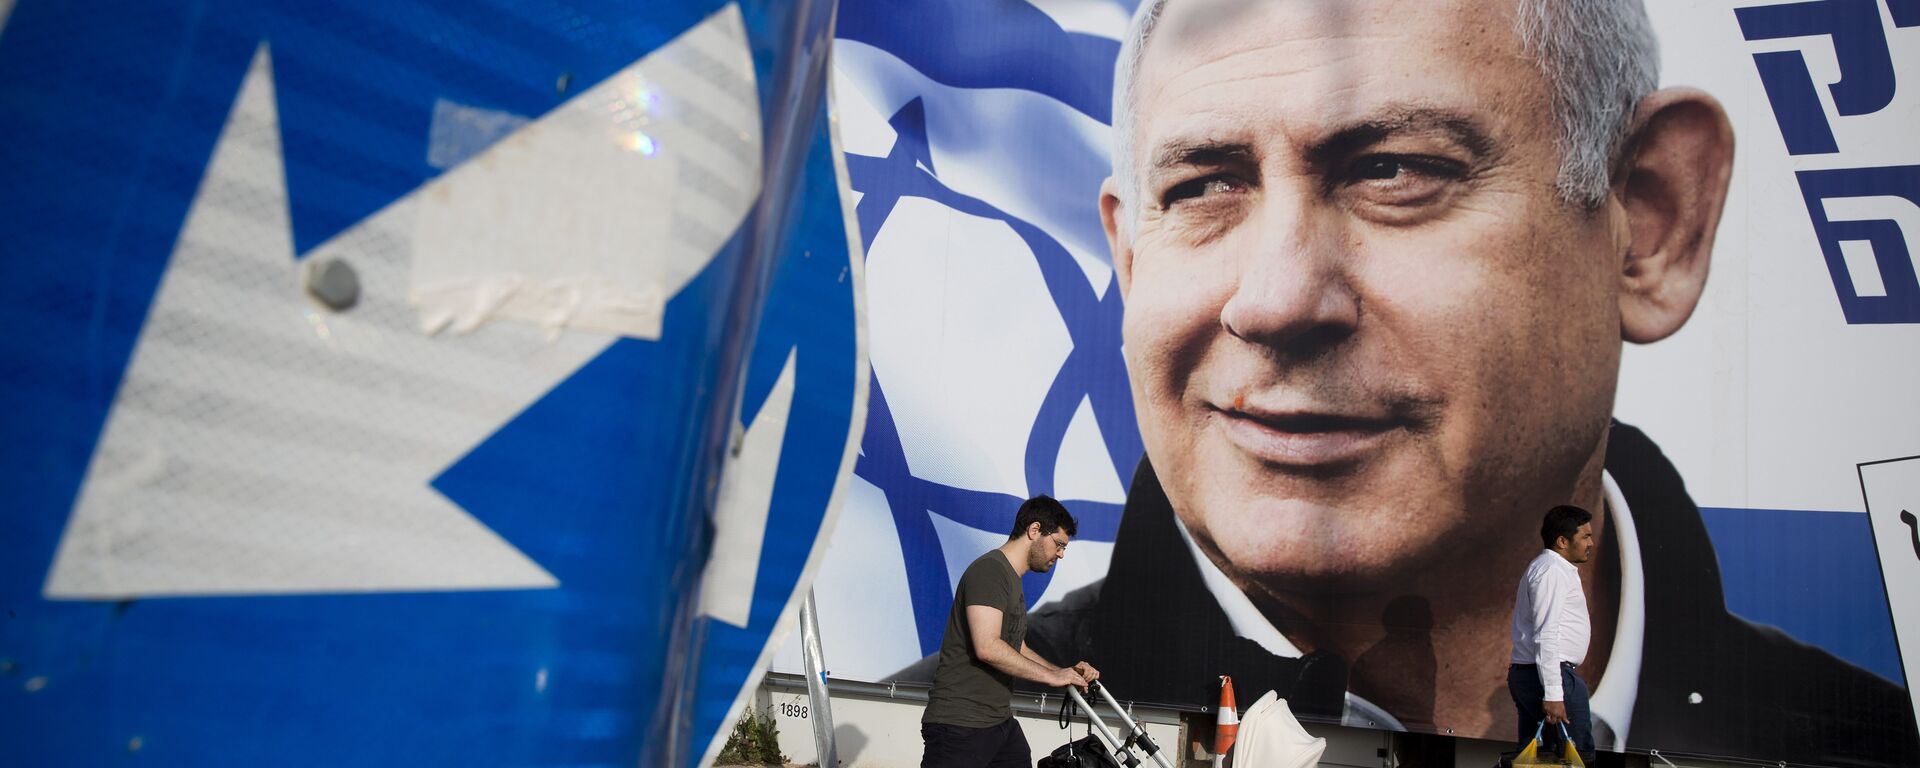 A man walks by an election campaign billboard showing Israel's Prime Minister Benjamin Netanyahu, the Likud party leader, in Tel Aviv, Israel. File photo. - Sputnik International, 1920, 26.06.2022